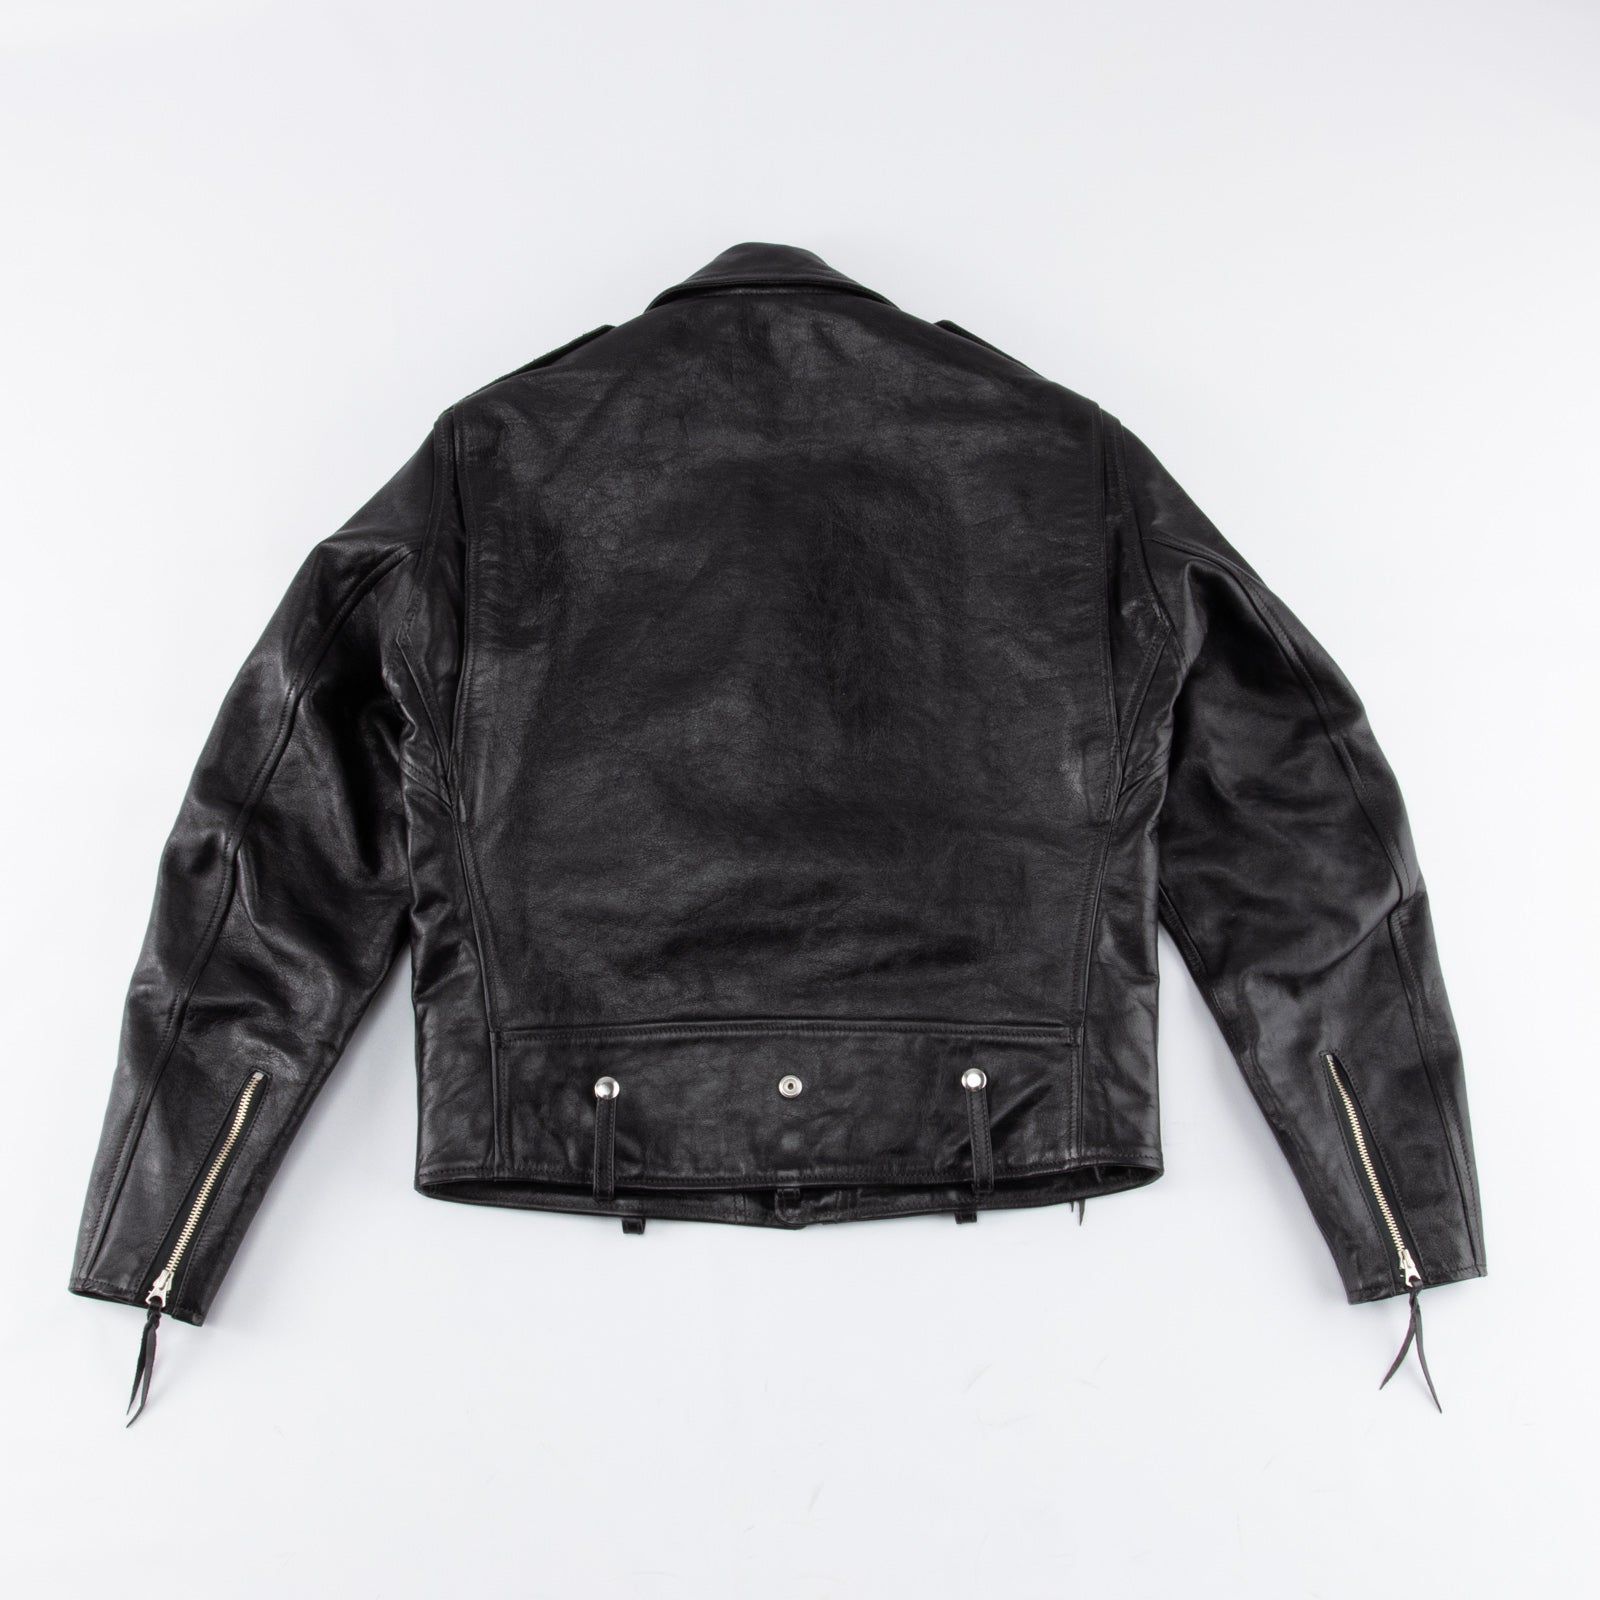 Eastman Leather Clothing Roadstar Jacket - Black Horsehide - Standard ...